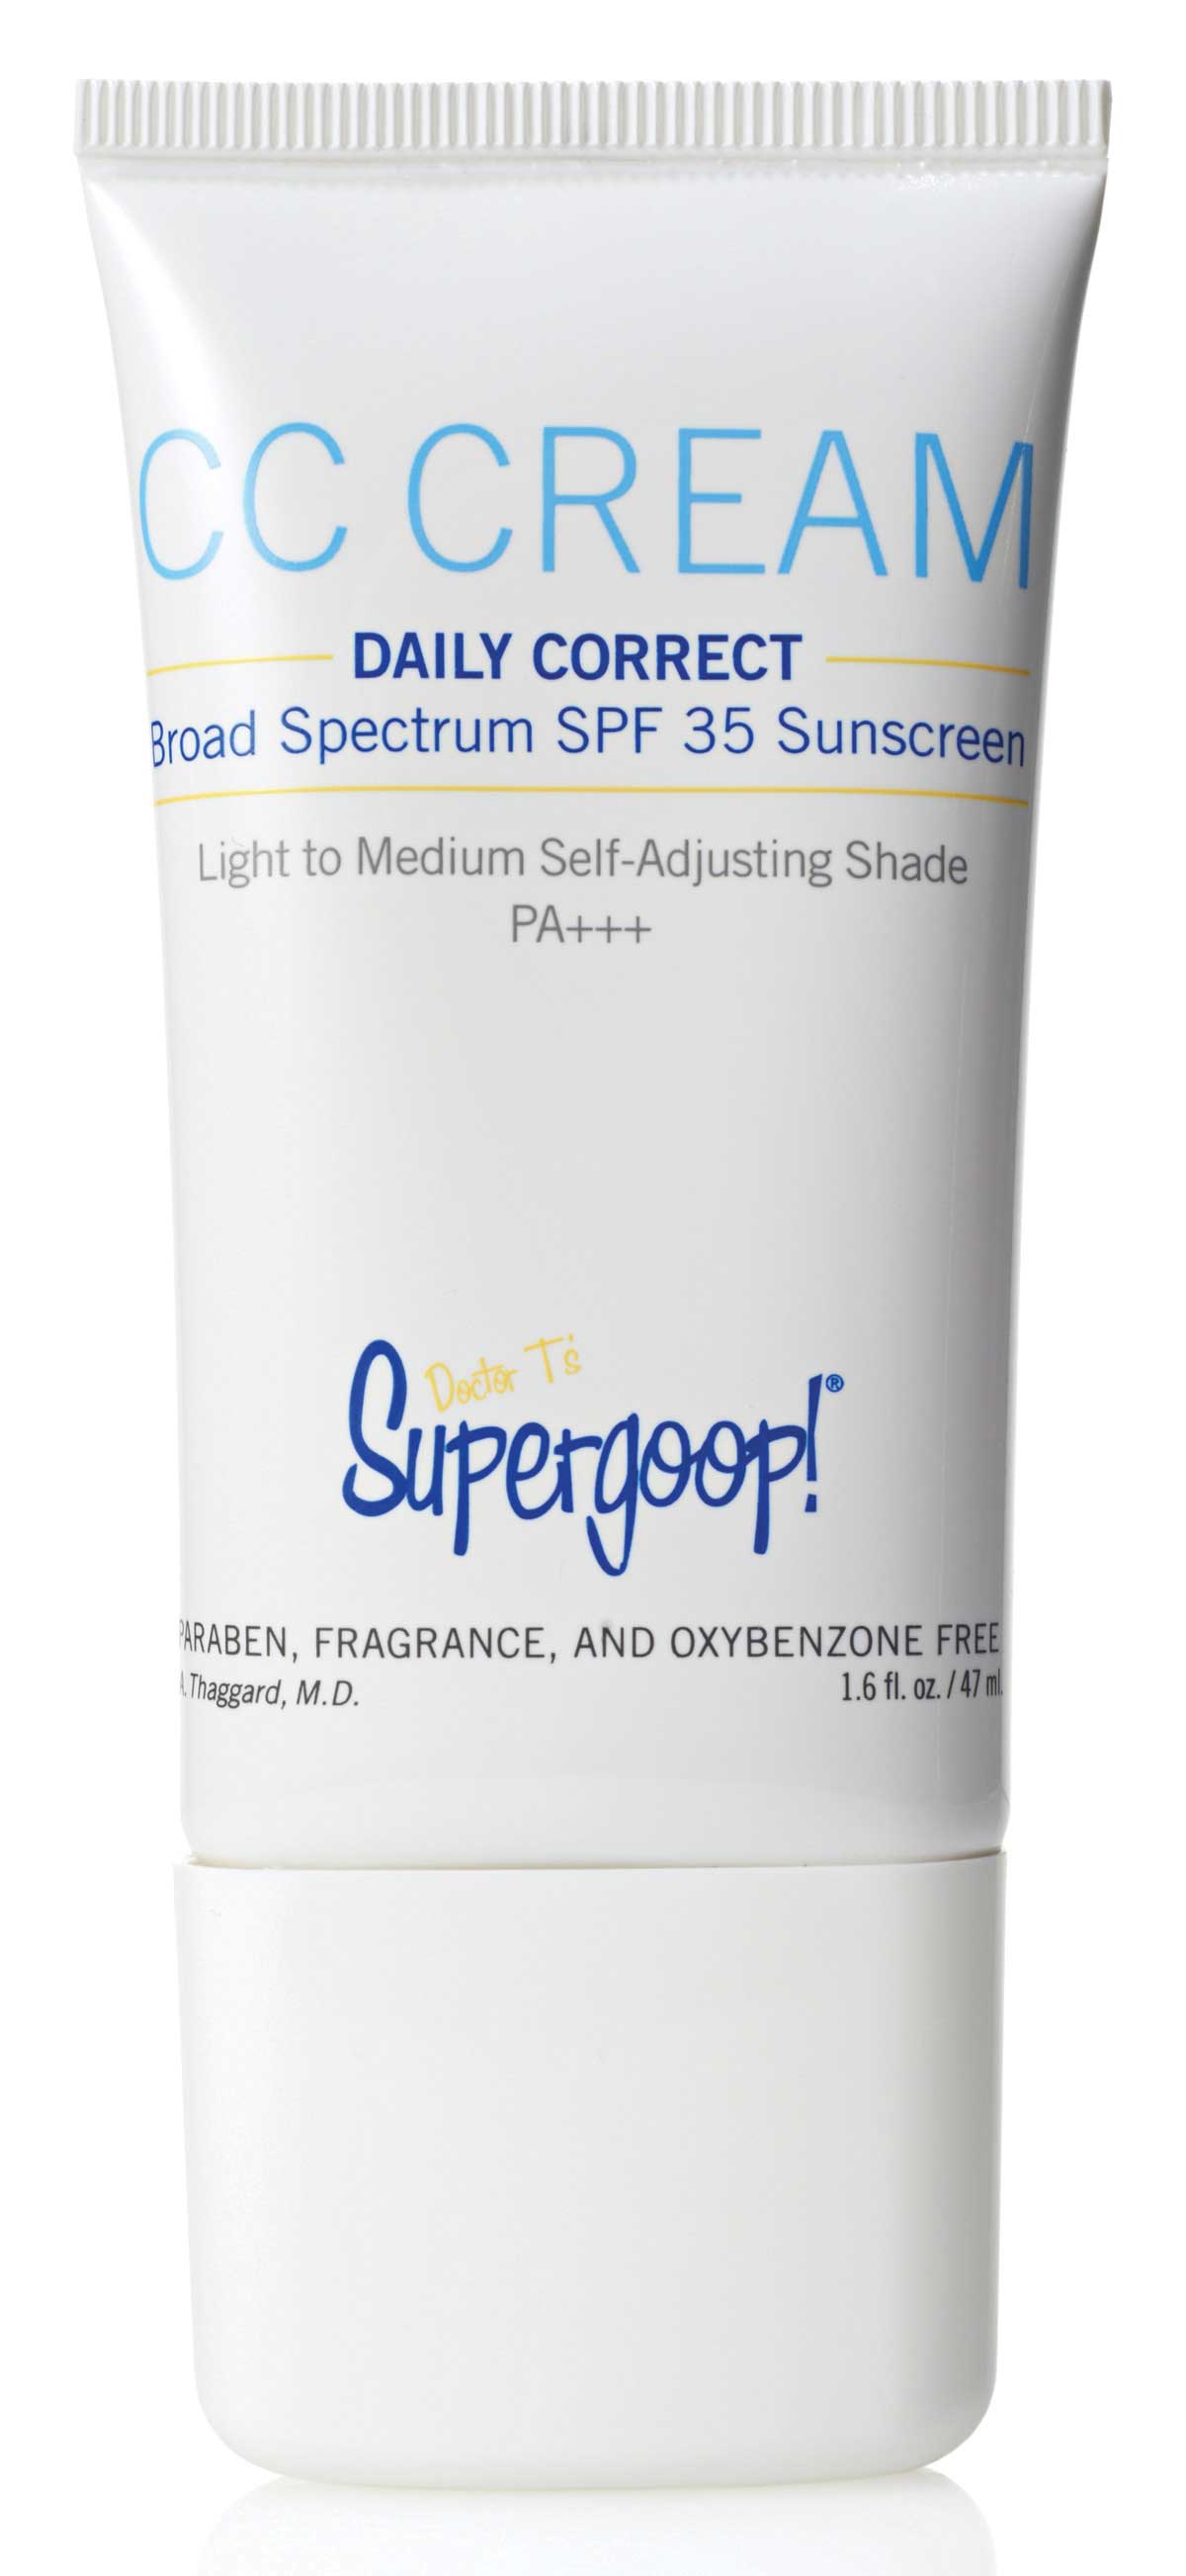 Product picture: Supergoop! CC Cream Daily Correct, SPF 35